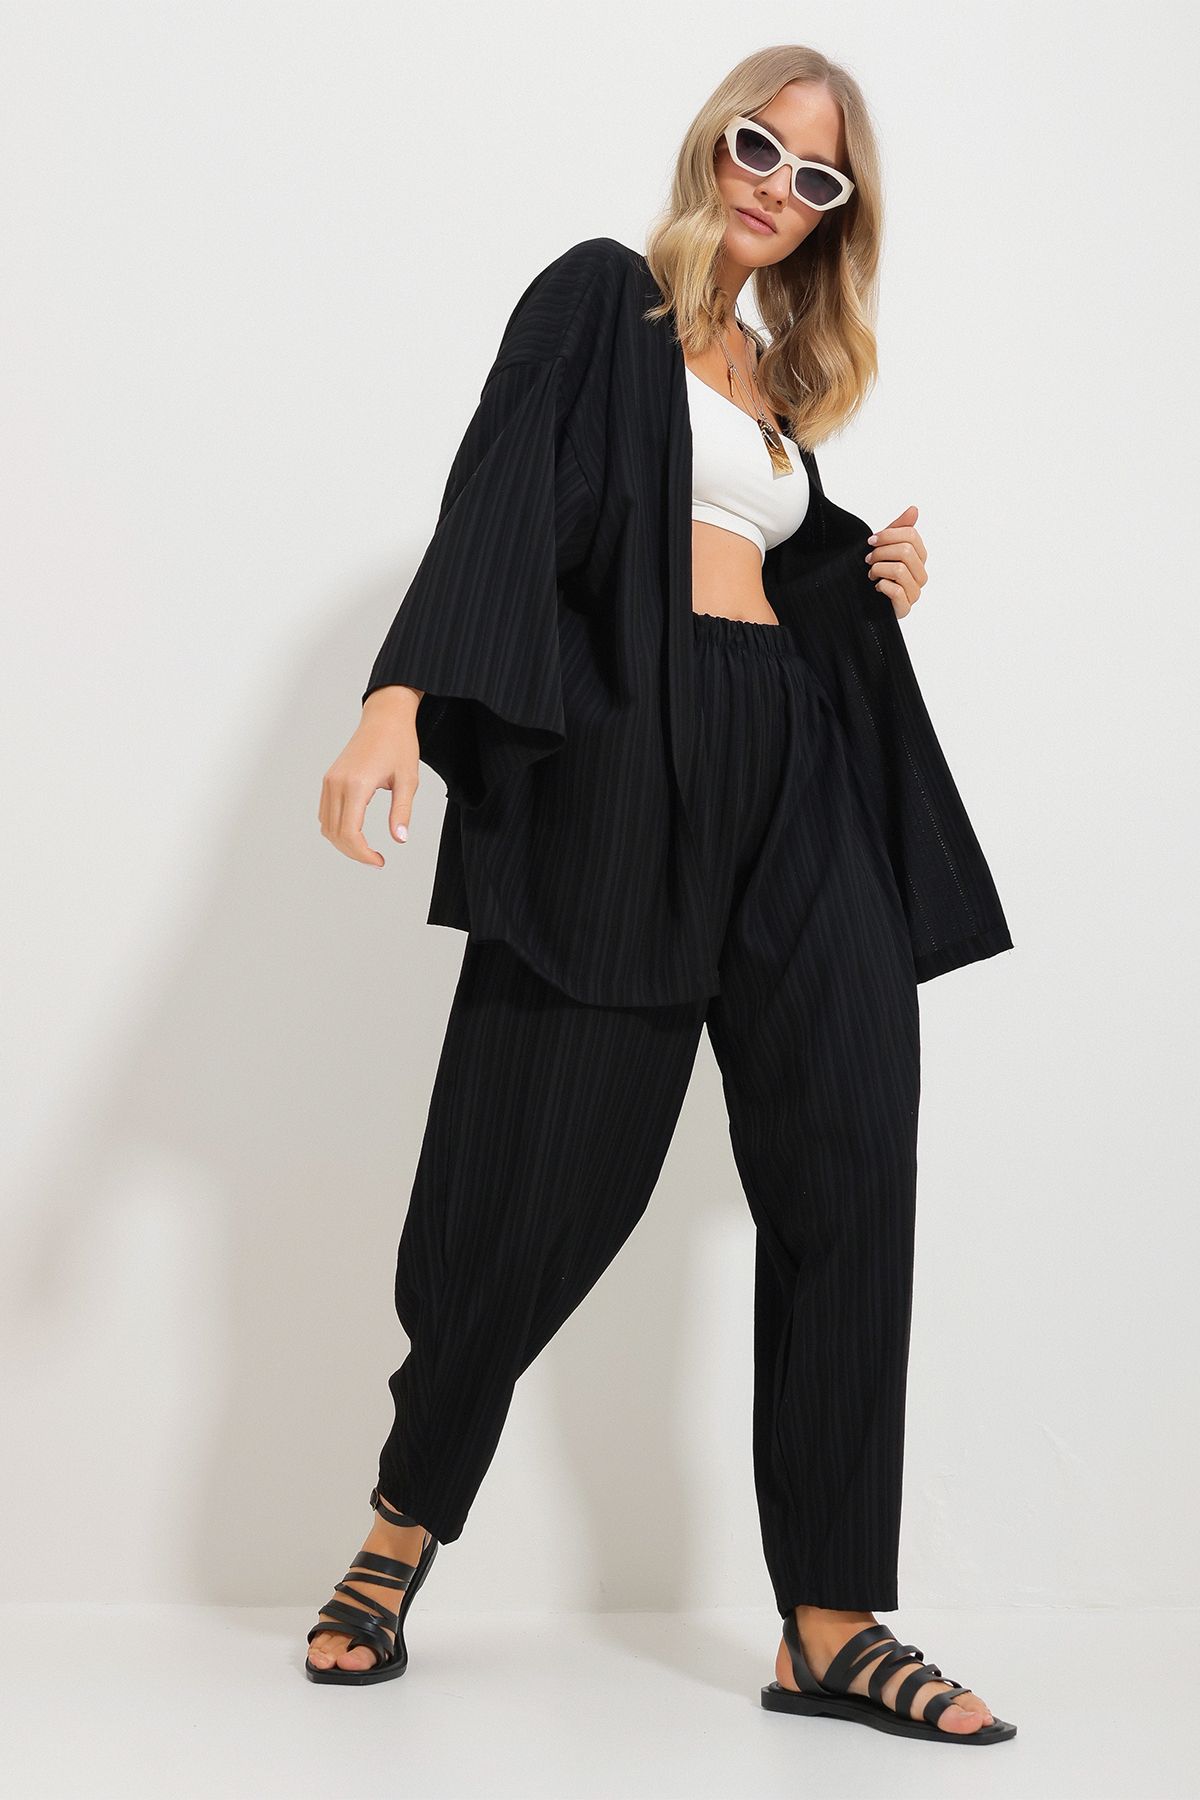 Trend Alaçatı Stili Kadın Siyah Rahat Kesim Pantolon Kimono Ceket Dokuma İkili Takım Alc-X11694